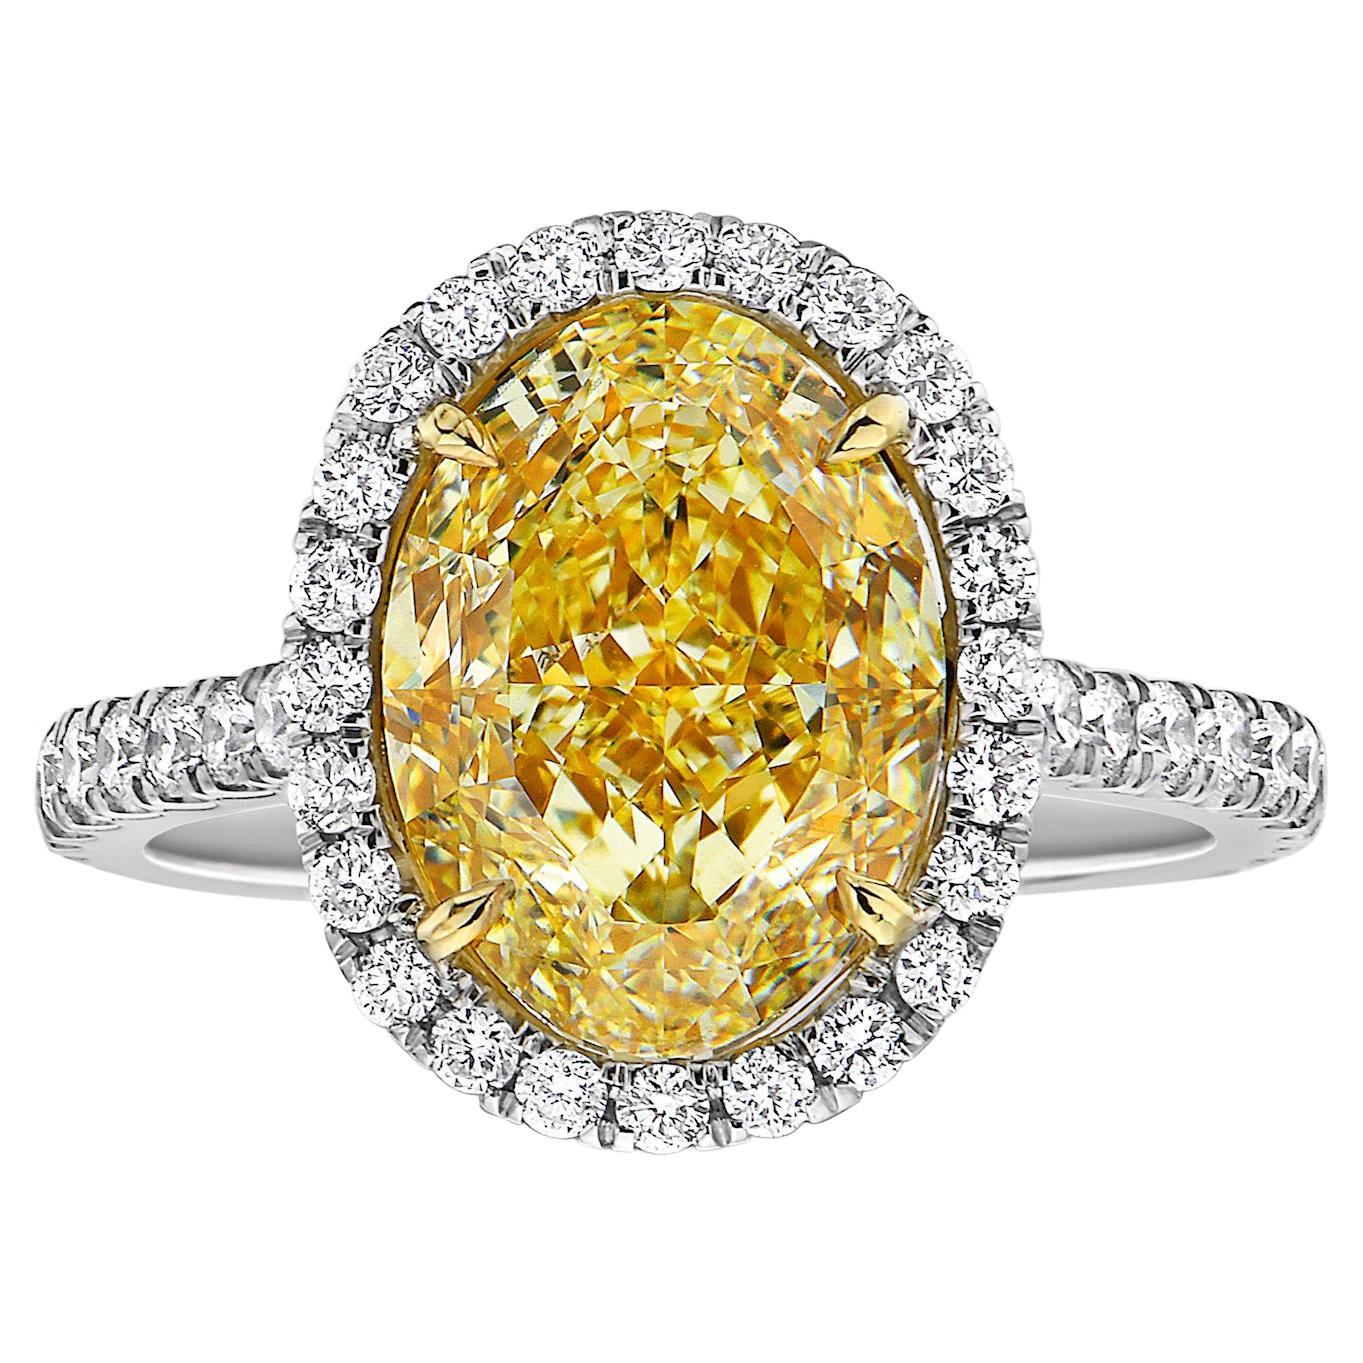 5 Carat VS1 Light Yellow Oval Halo Diamond Ring For Sale